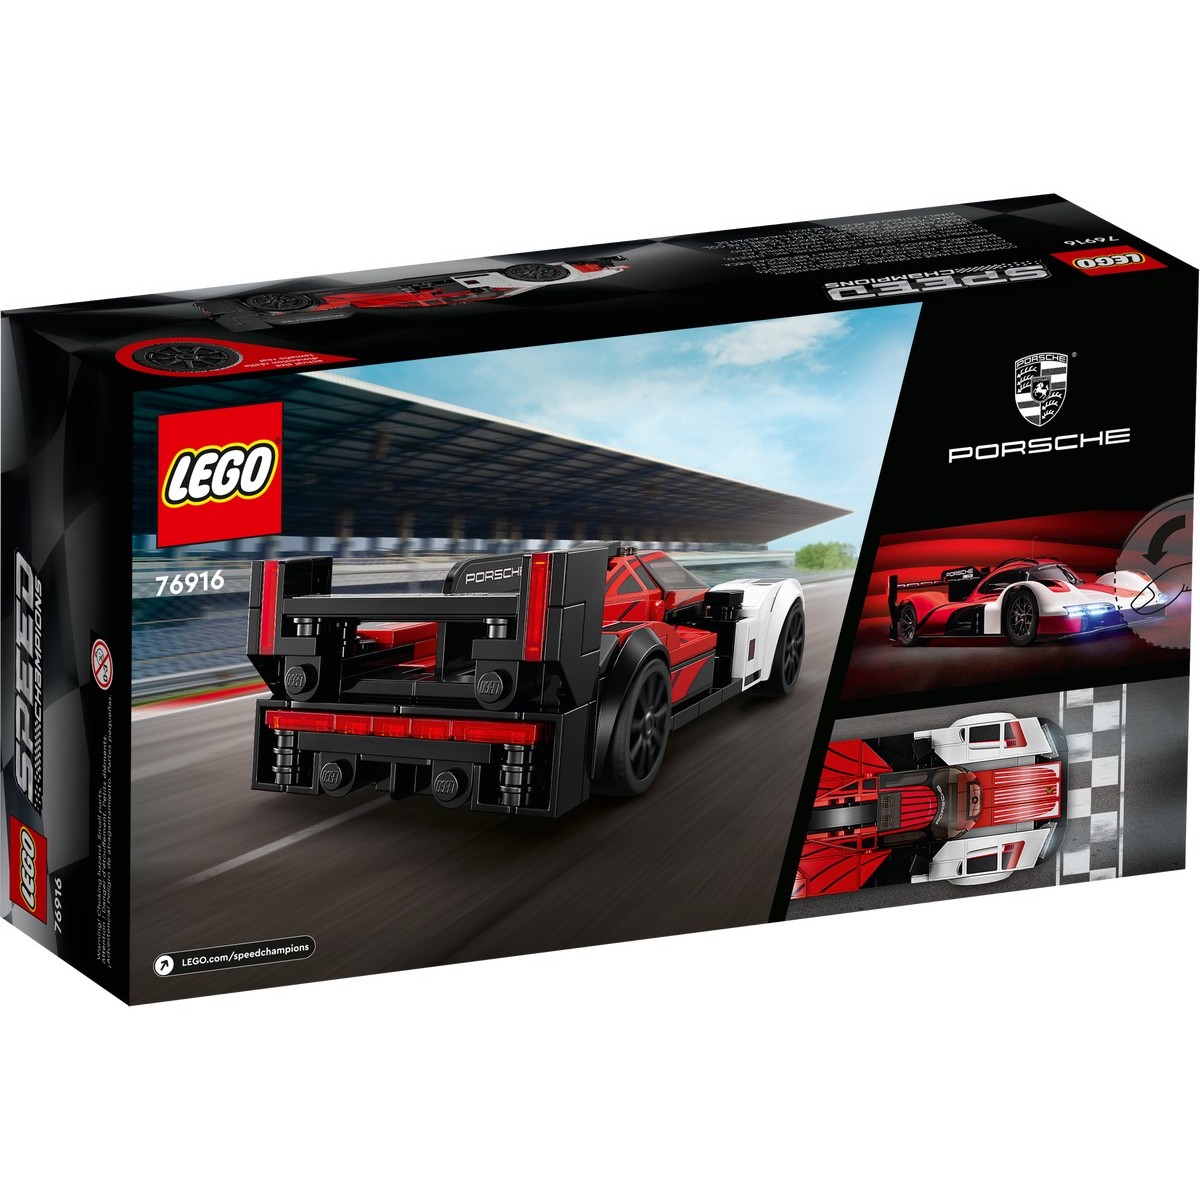 LEGO SPEED CHAMPIONS PORSCHE 963 /76916/ posledný kus